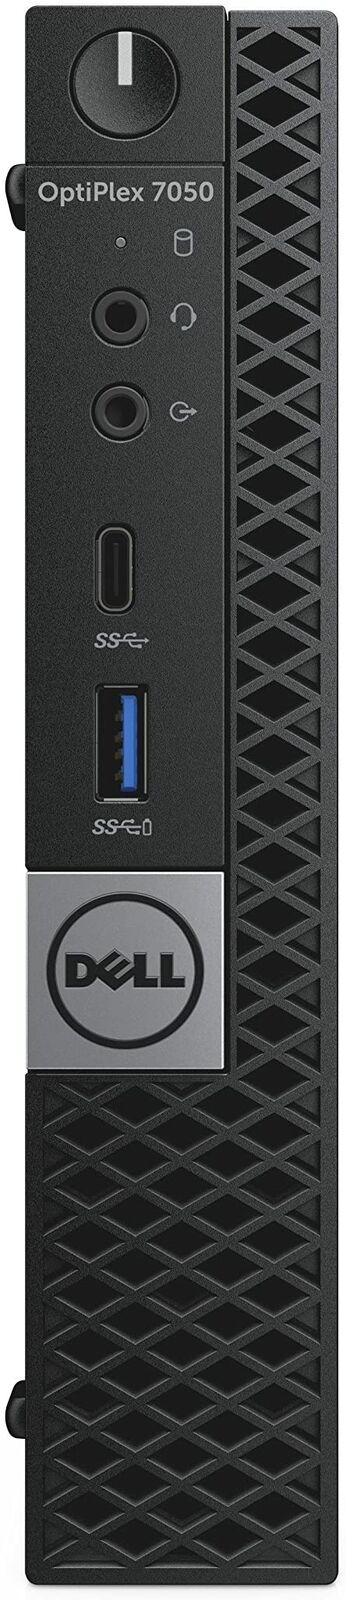 Dell OptiPlex 7050 MFF i7-6700T, 32GB RAM, 256GB SSD, WiFi, Win10 Pro w/ Keyboard Mouse (Refurbished) $369 + Free Shipping